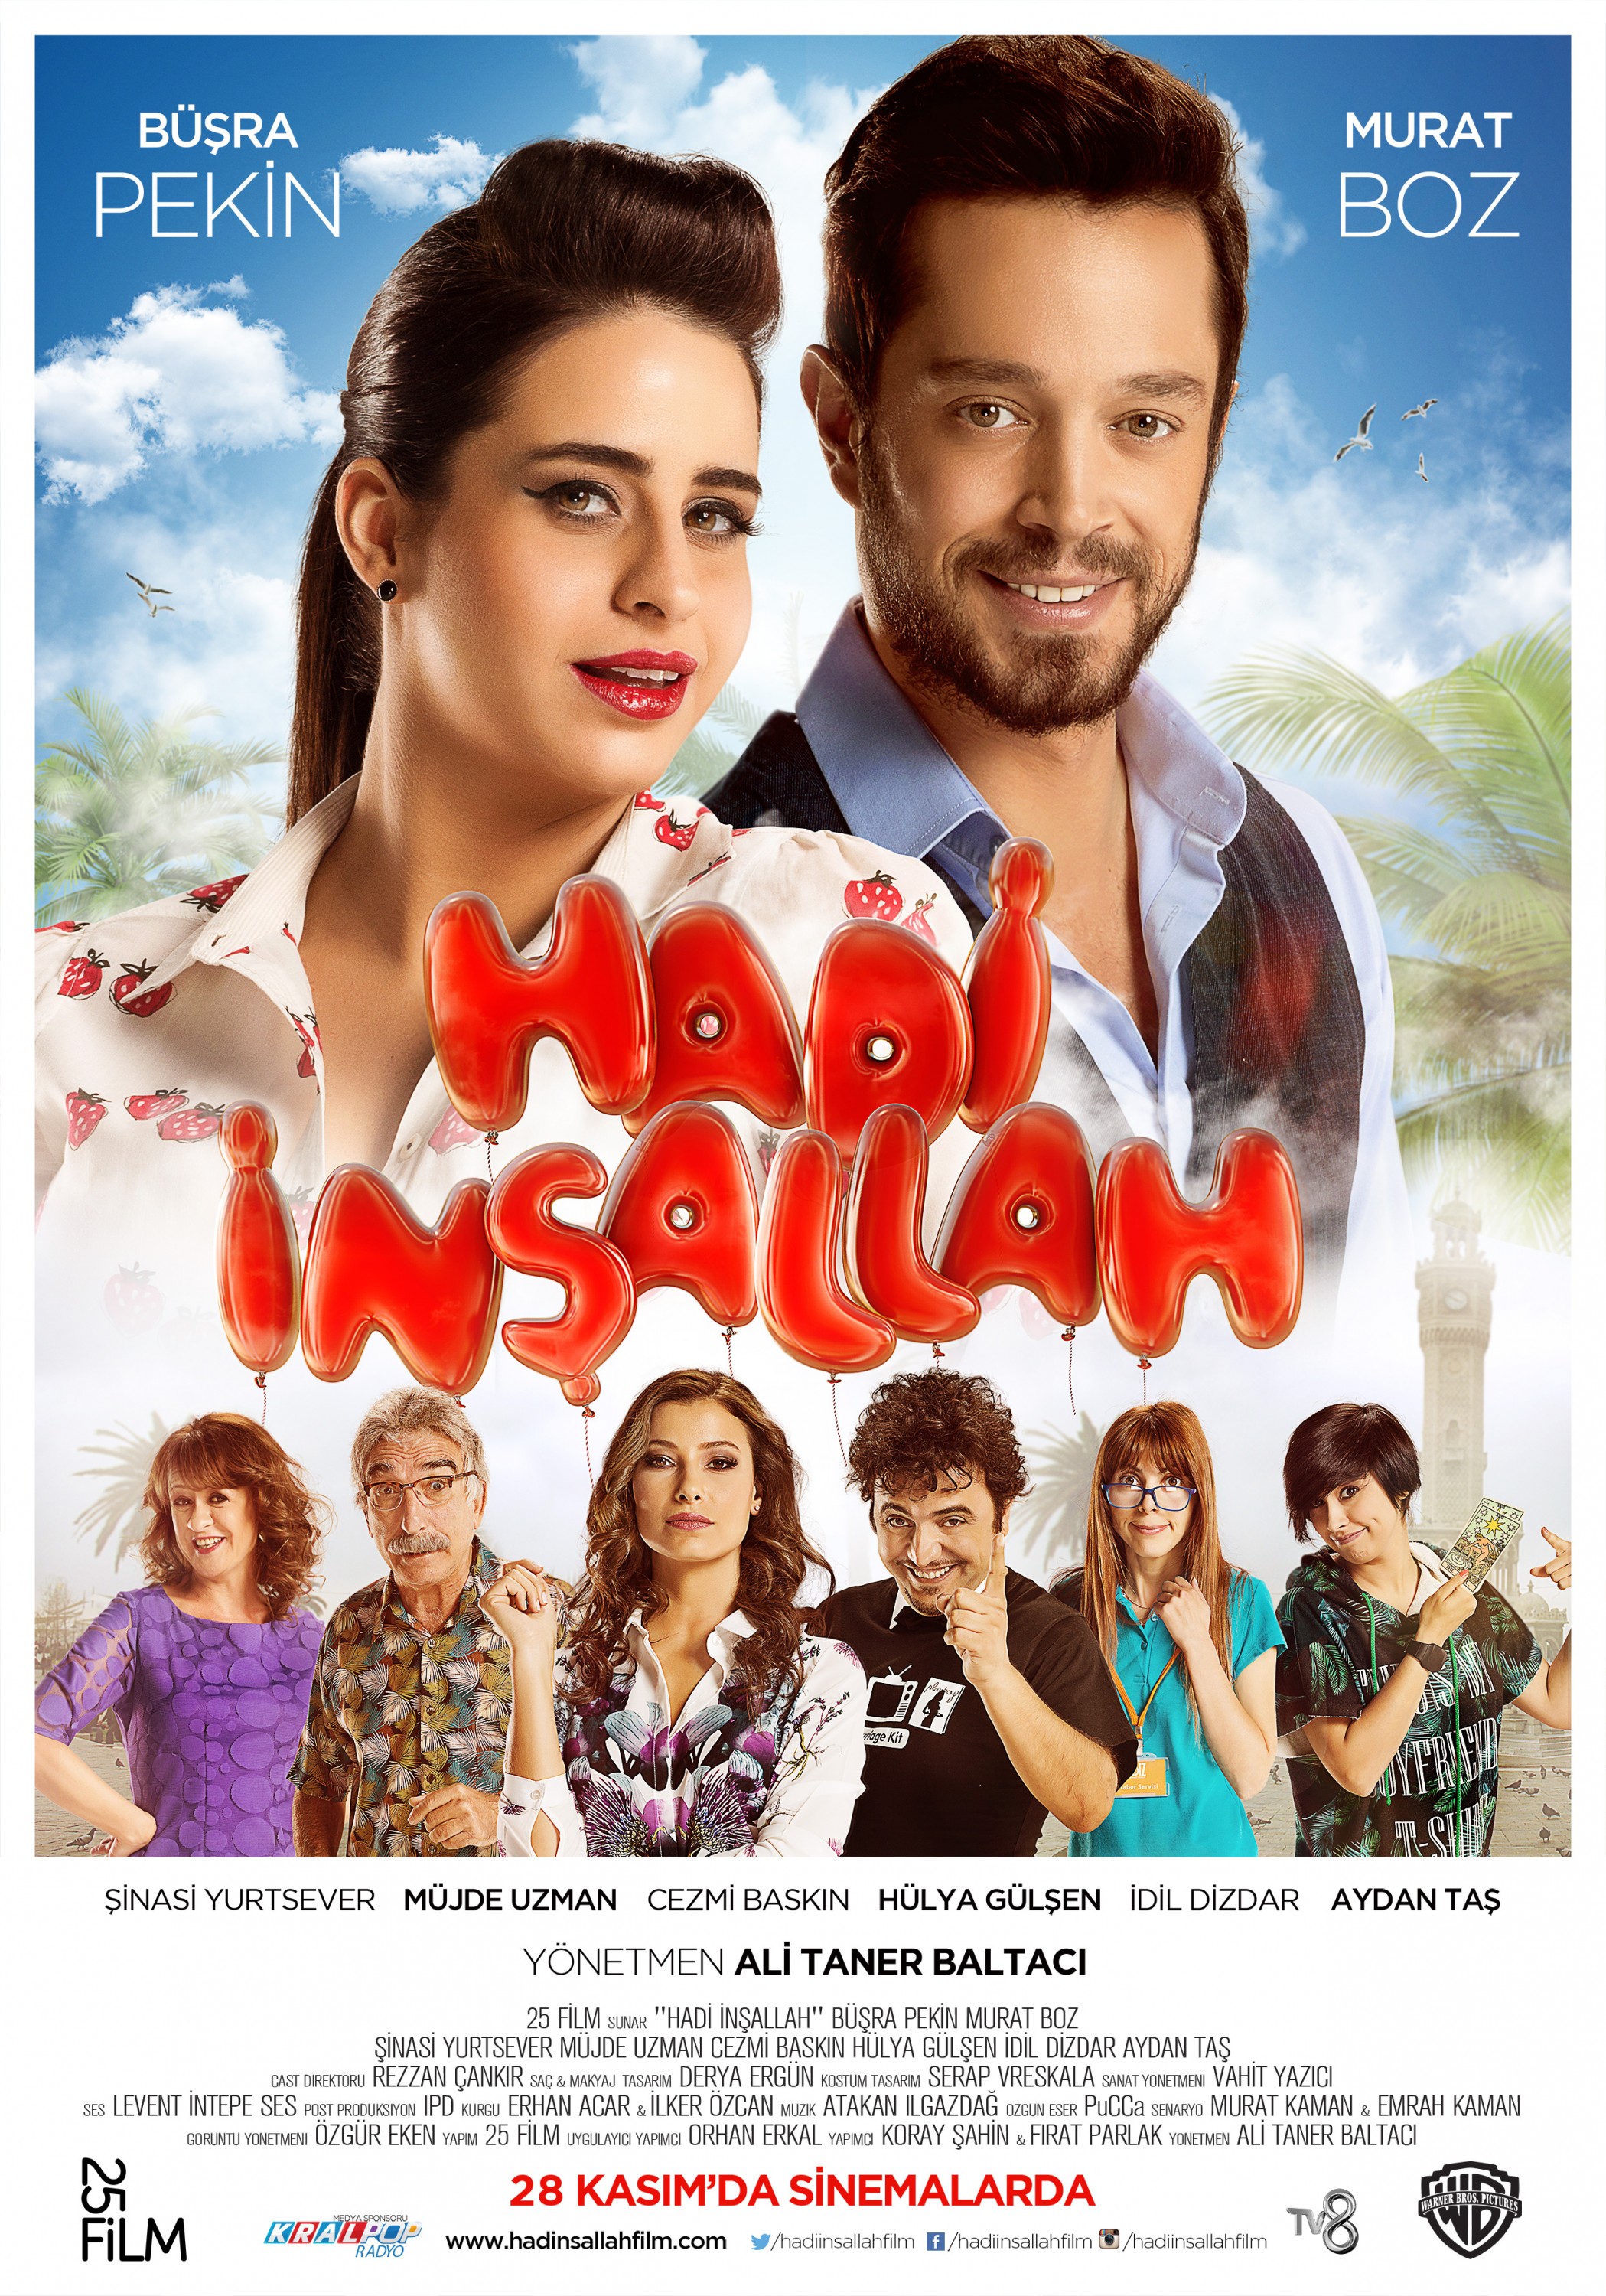 Mega Sized Movie Poster Image for Hadi Insallah 